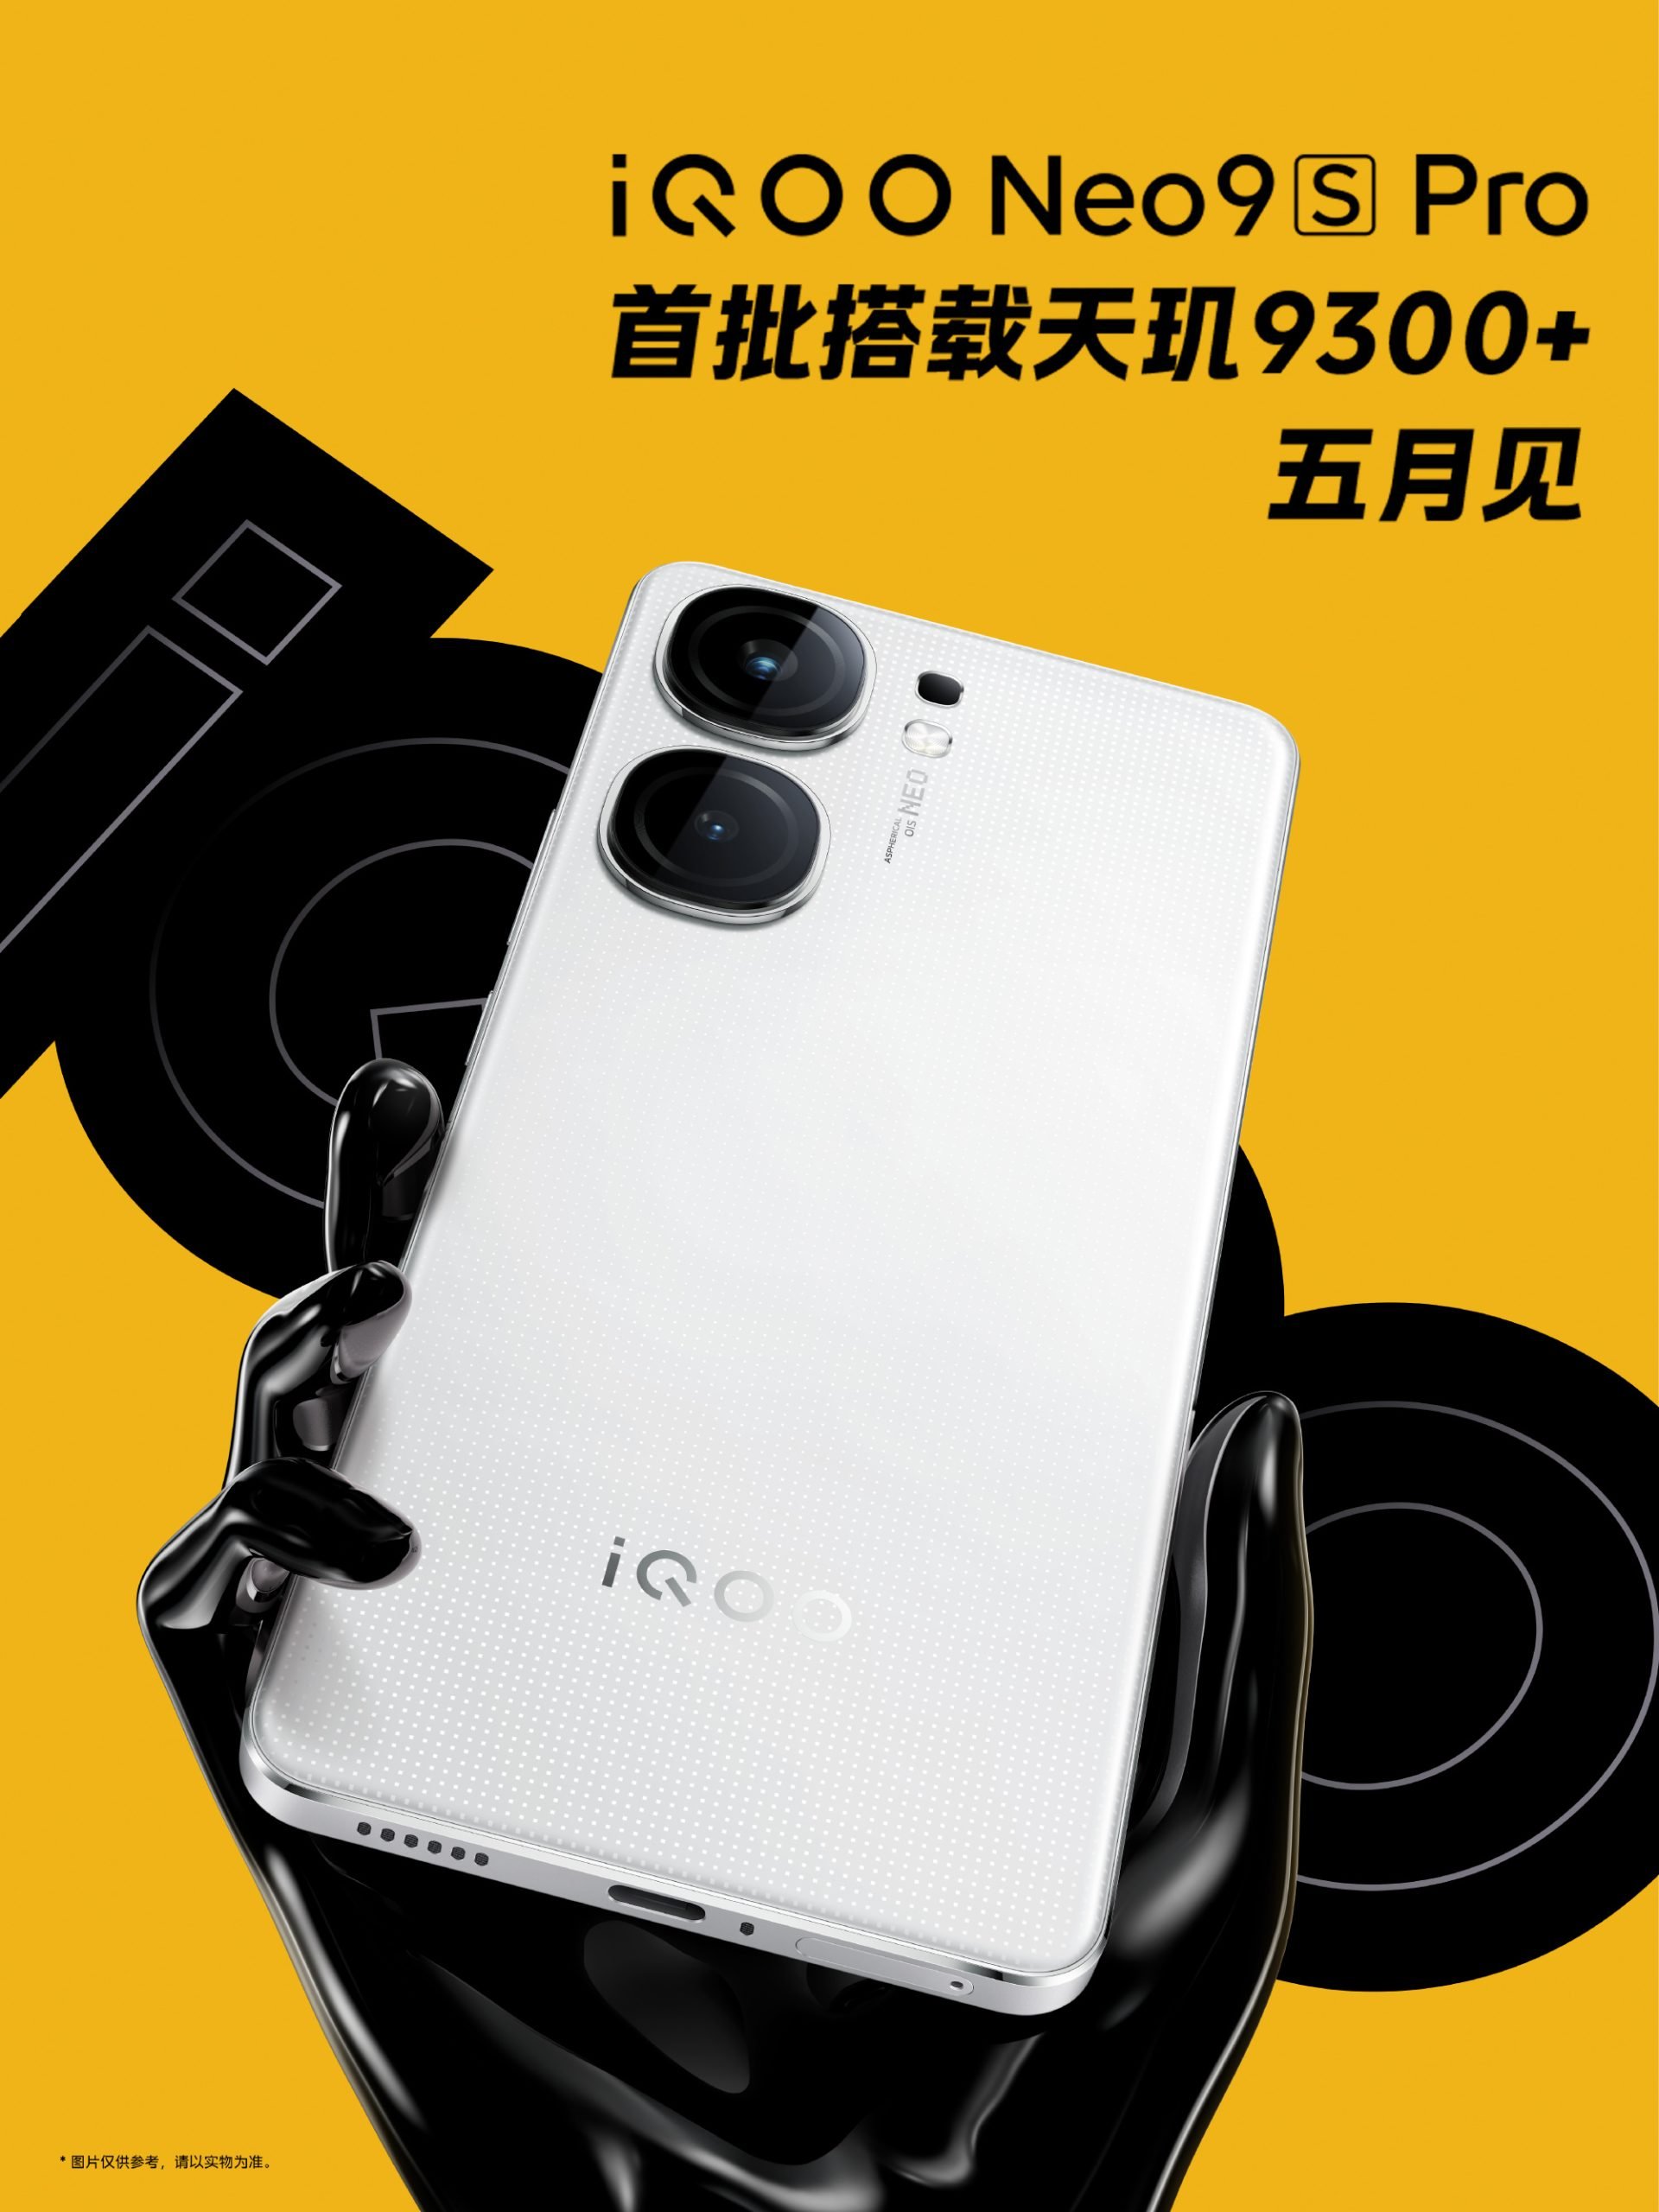 IQOO Neo 9S Pro May launch